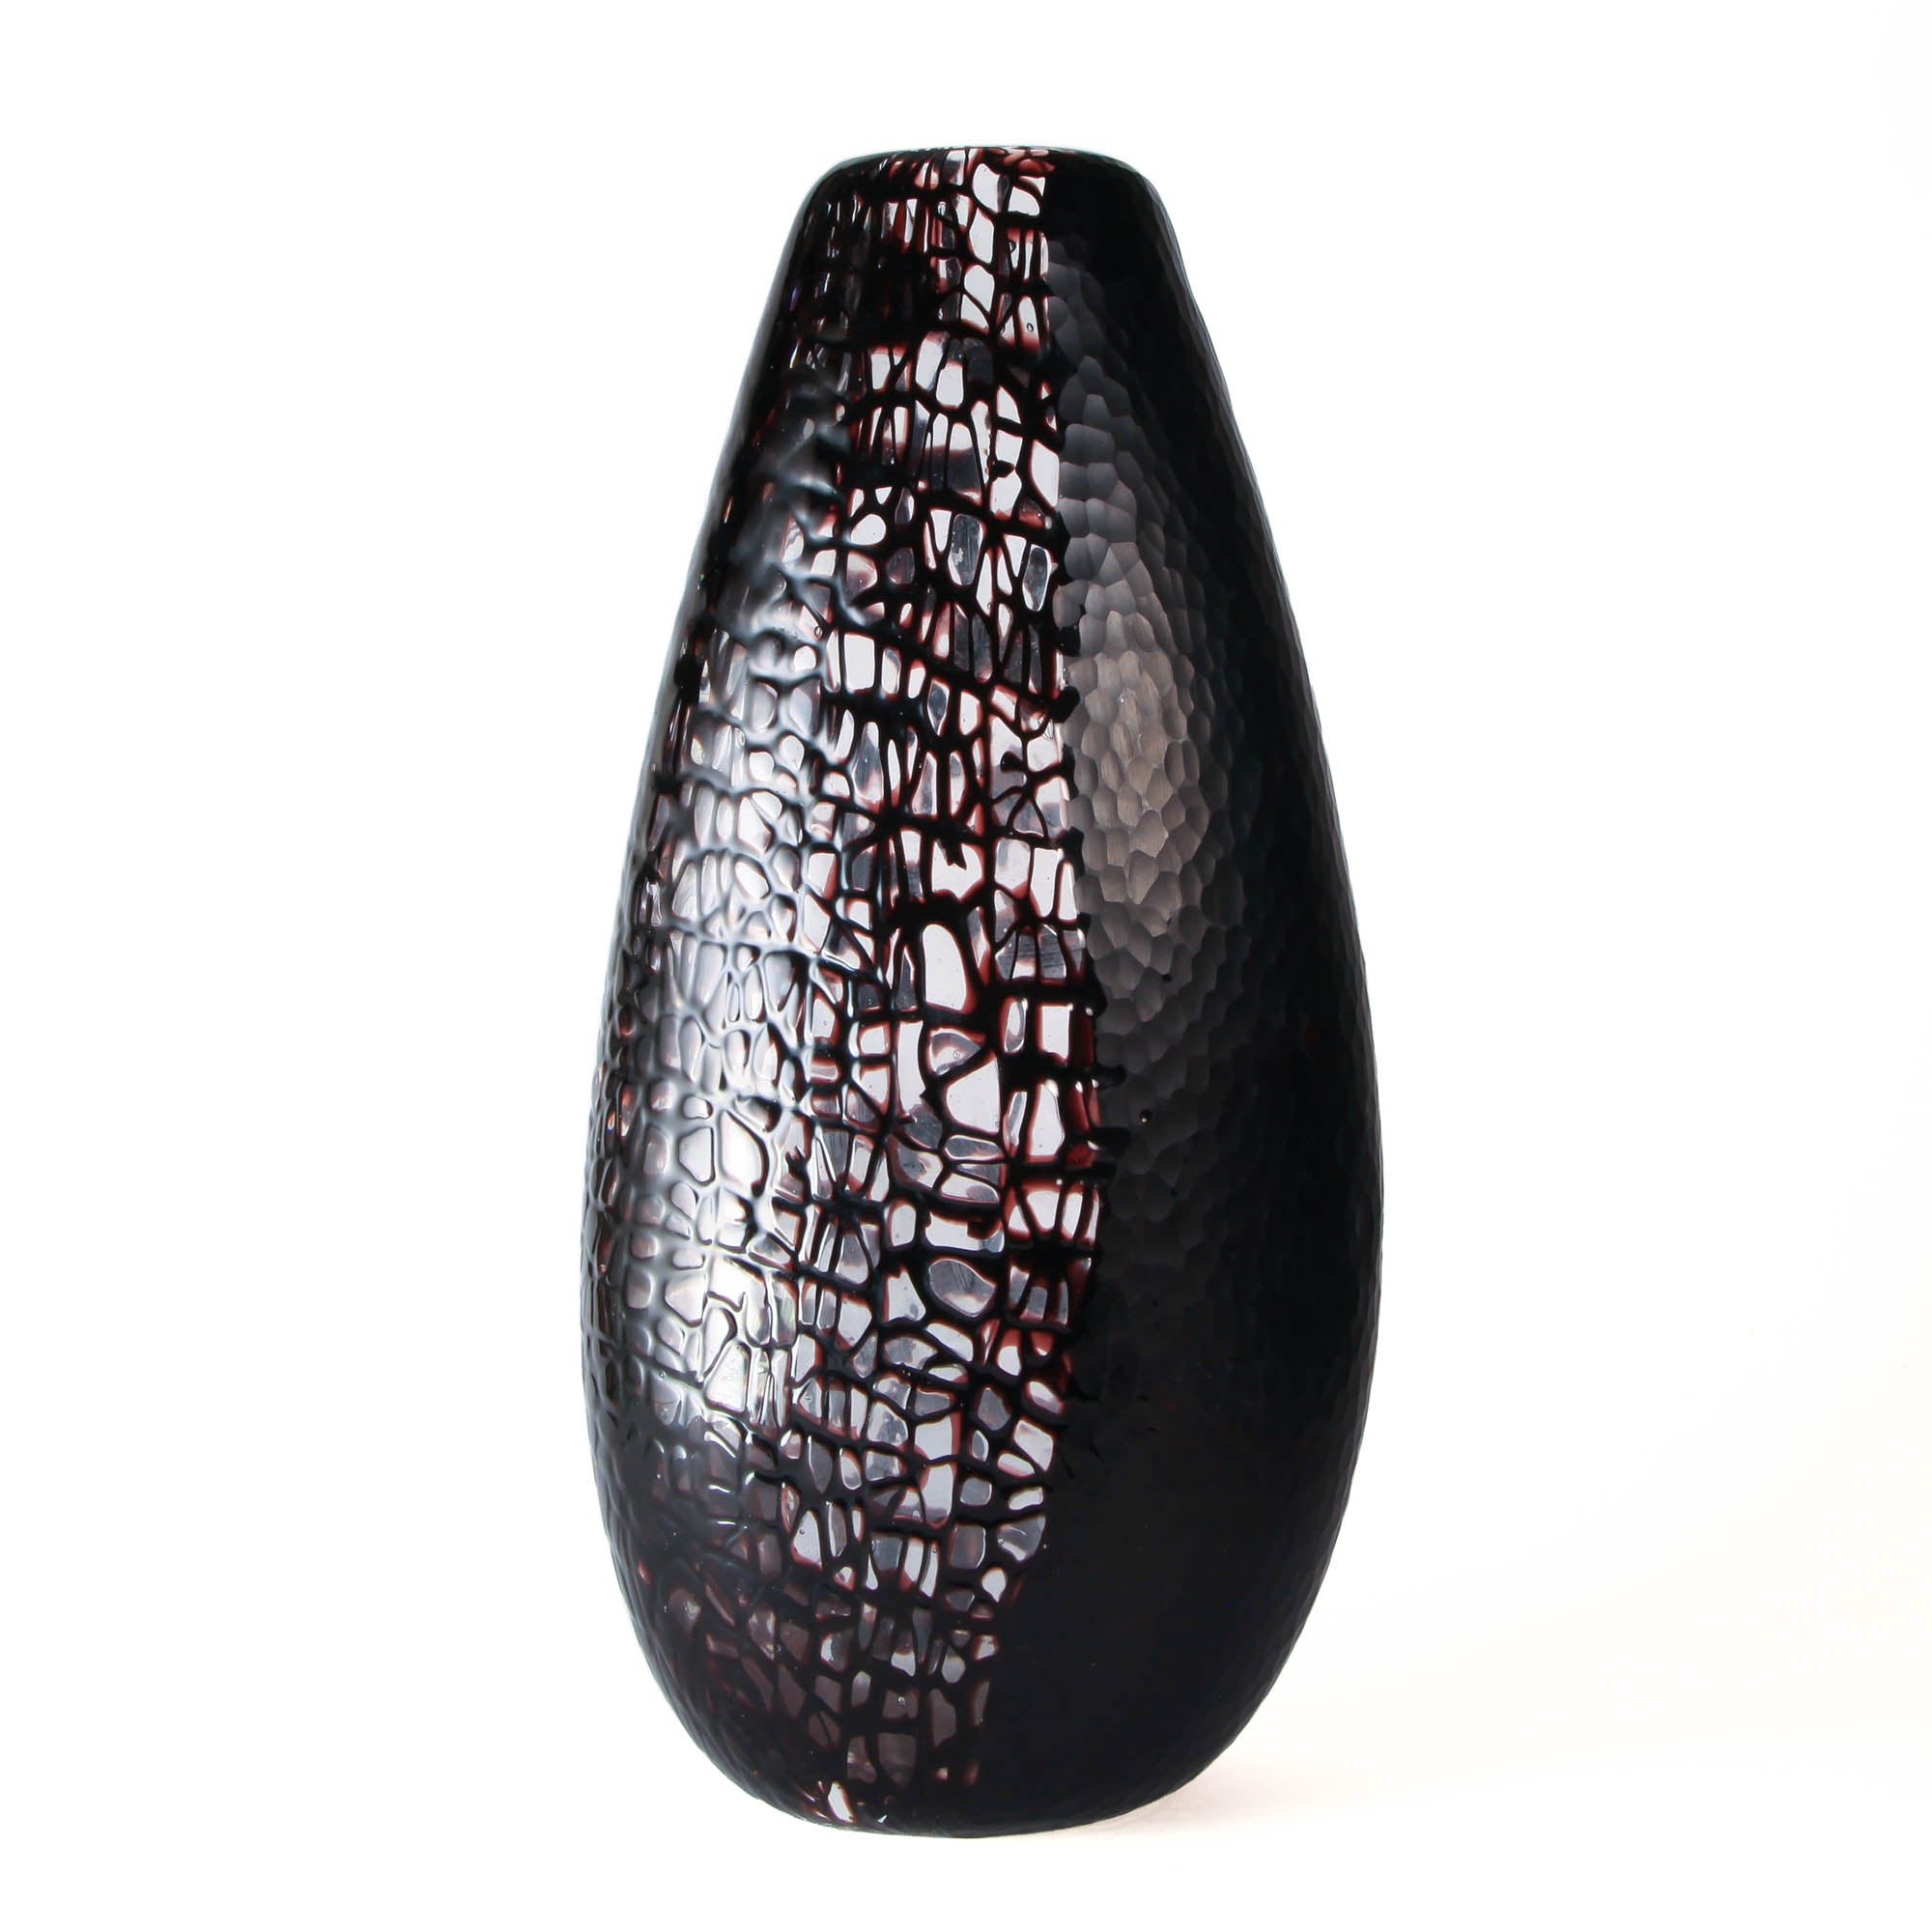 Black Knight vase - Murano Glass